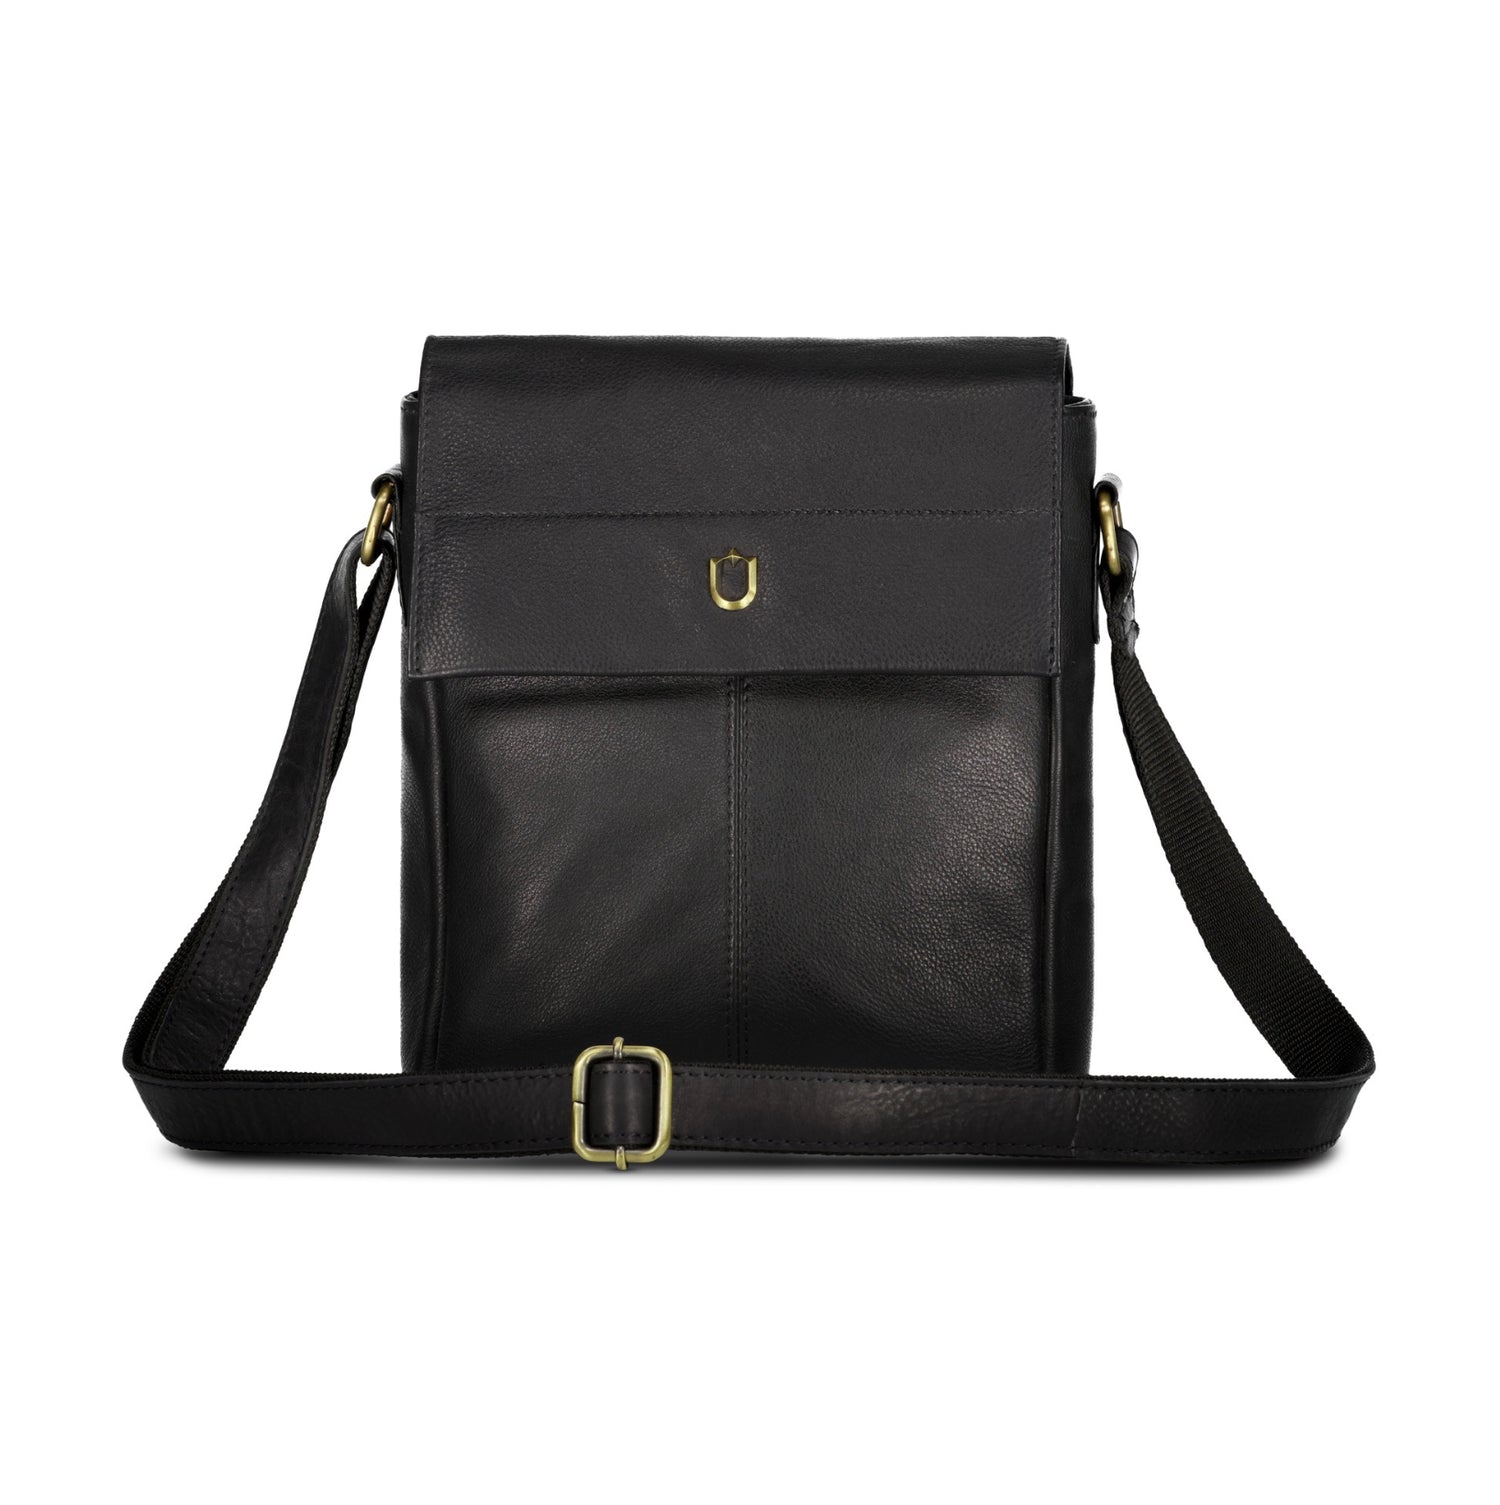 The Mini Messenger Bag - Black - Bags by Urbbana